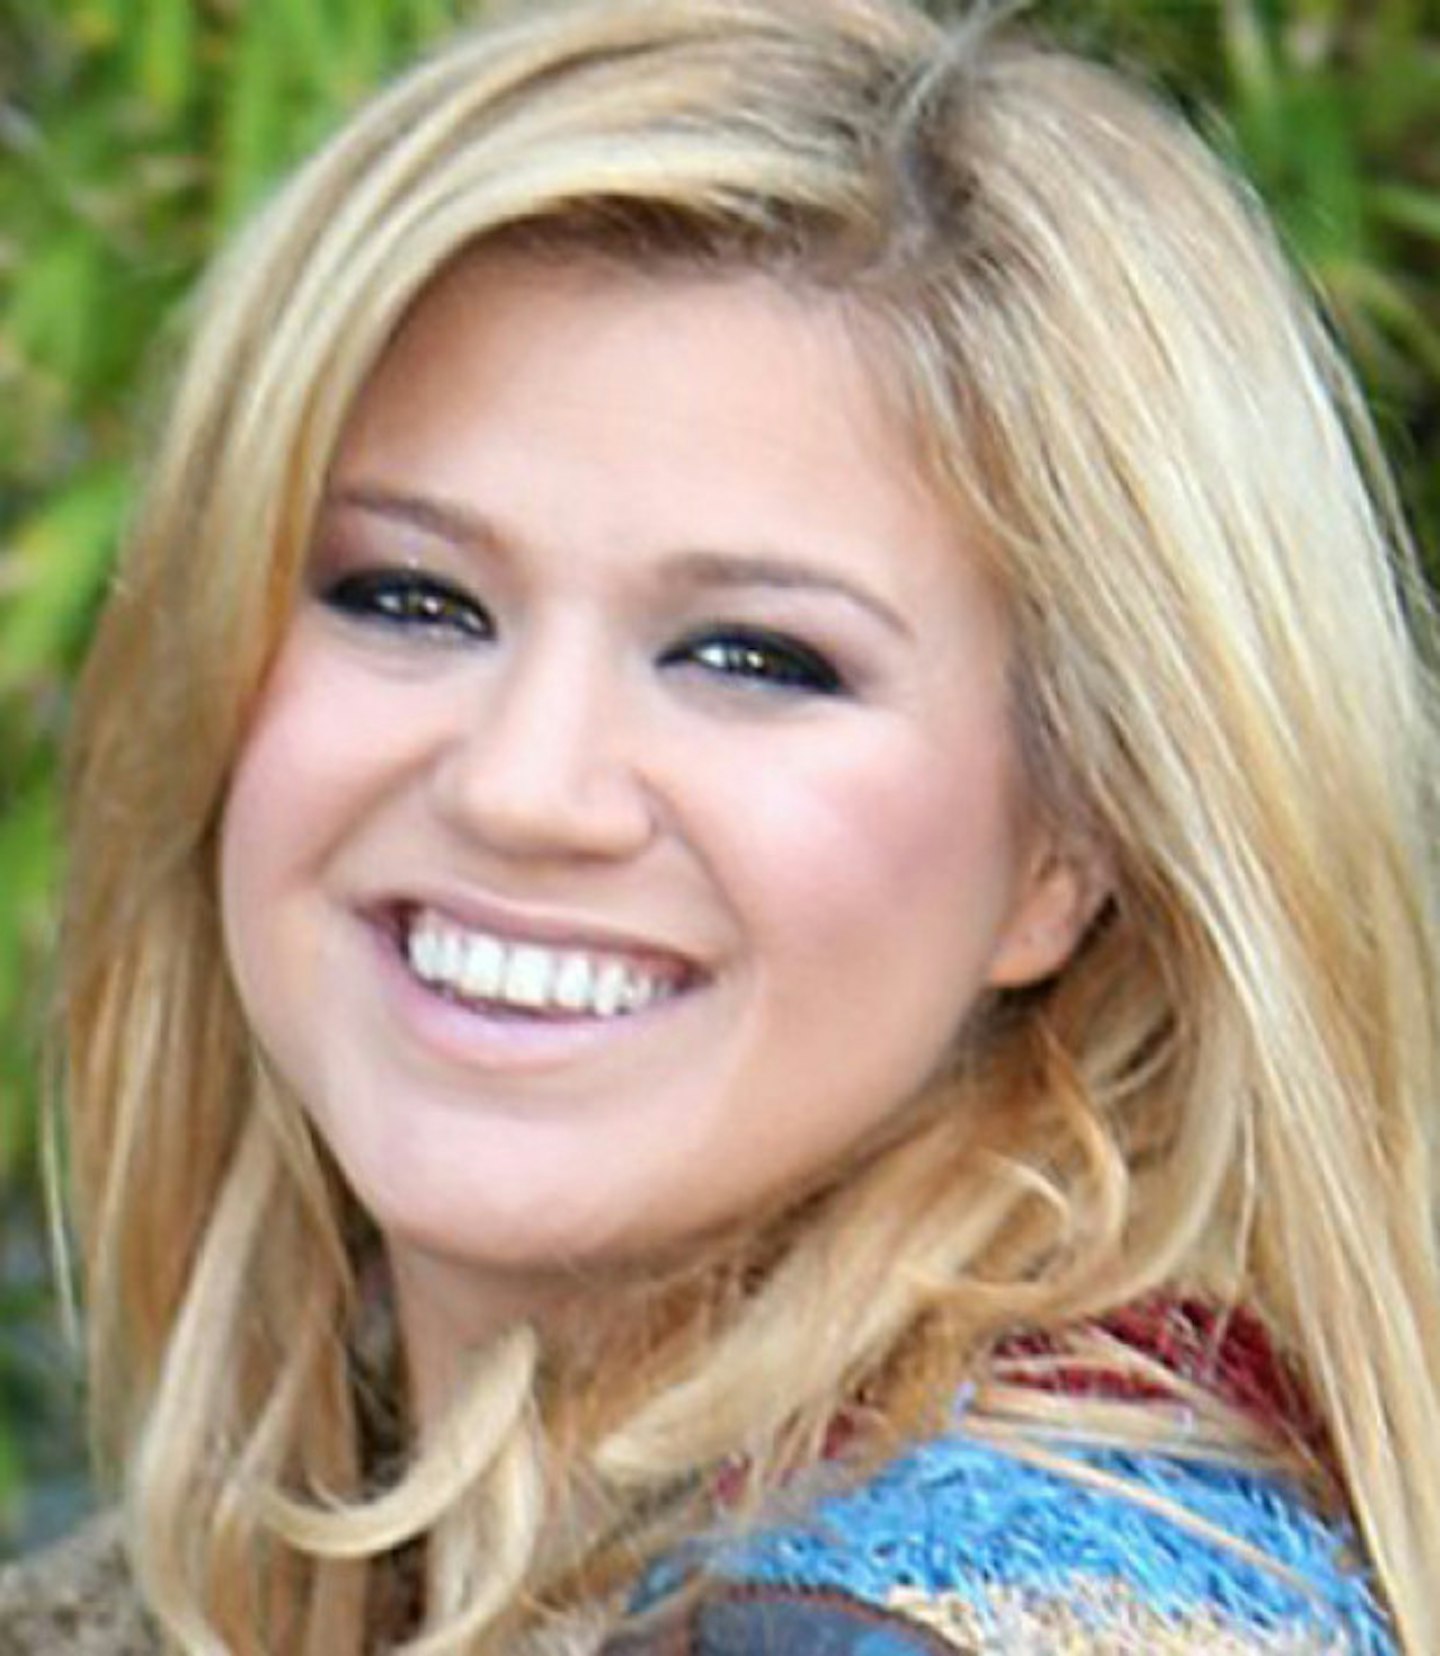 June 2014: Kelly Clarkson welcomed daughter River Rose